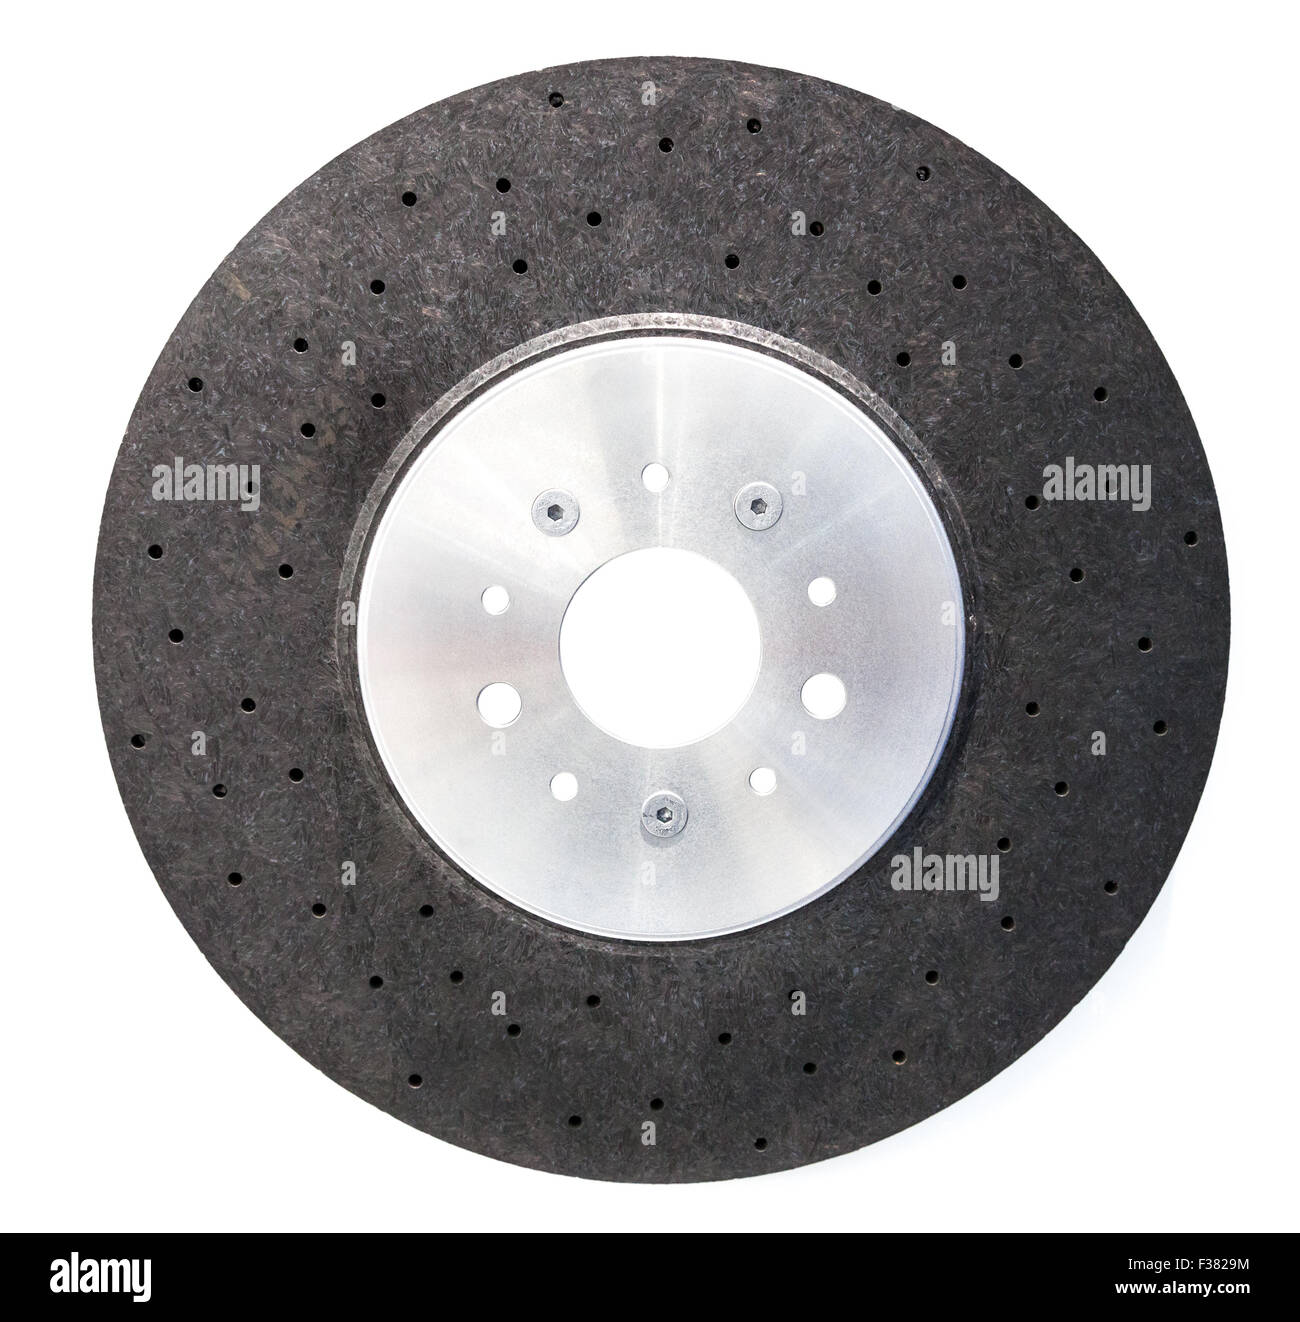 Automobile ceramic composite brake disk isolated on white Stock Photo